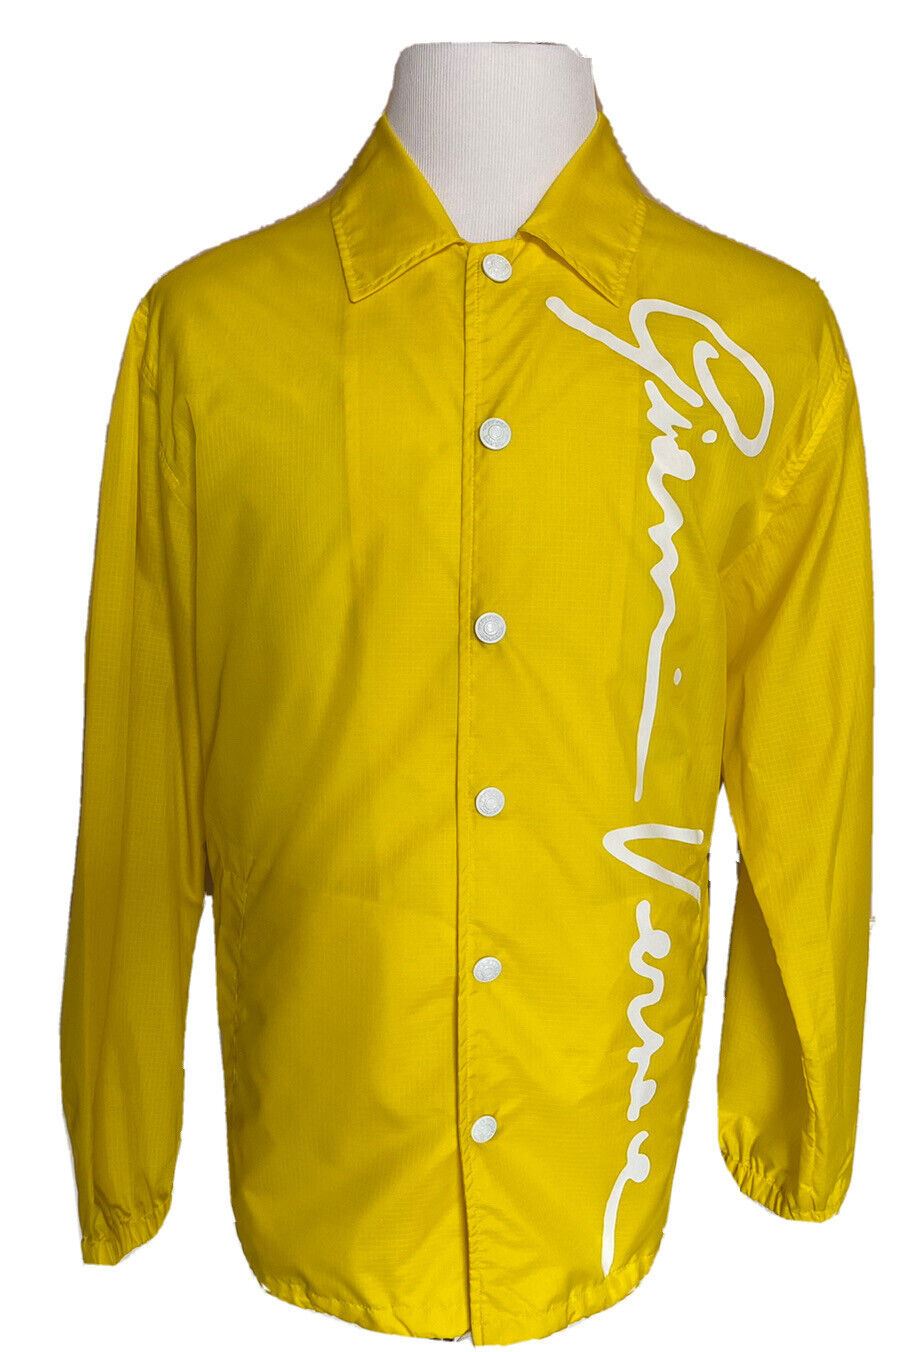 NWT $1150 Versace Men's Button Down Yellow Raincoat Jacket L (50 Euro) A85203 IT